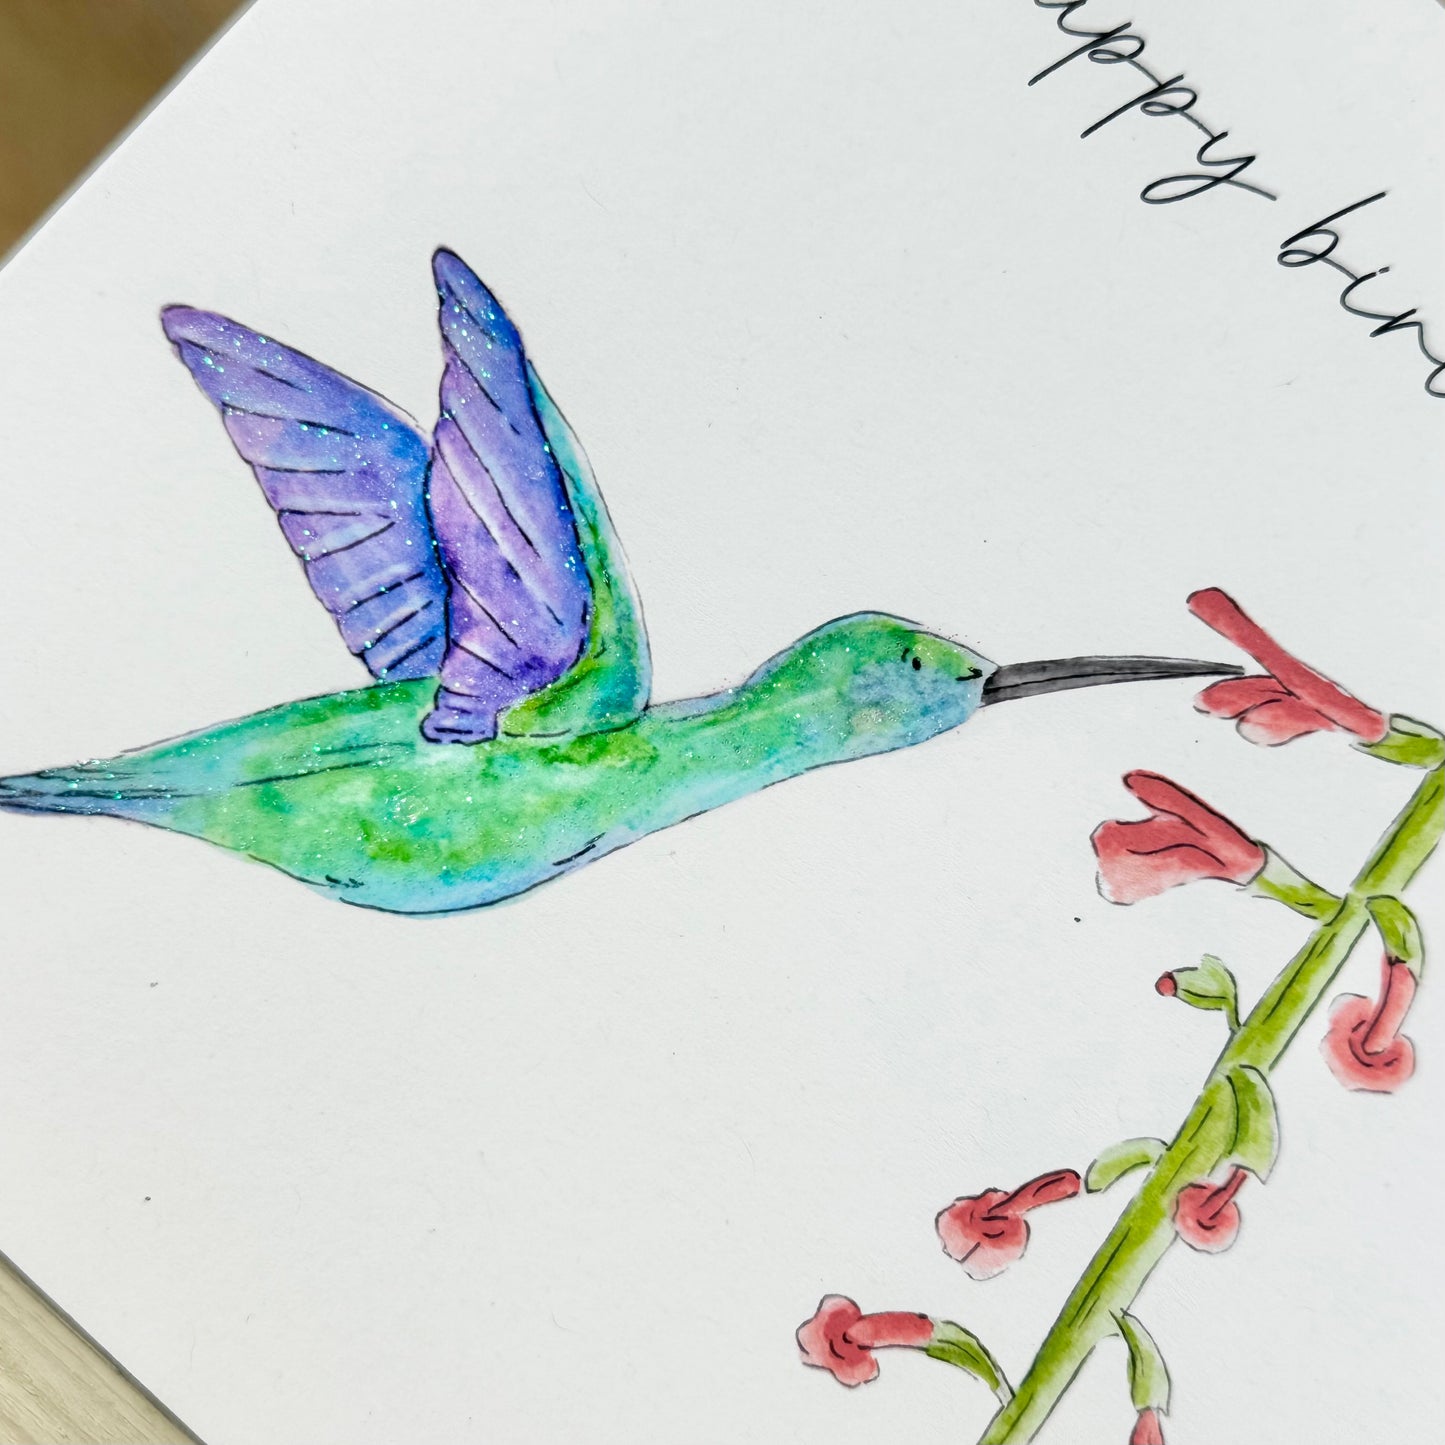 Hetty the Hummingbird Birthday Card